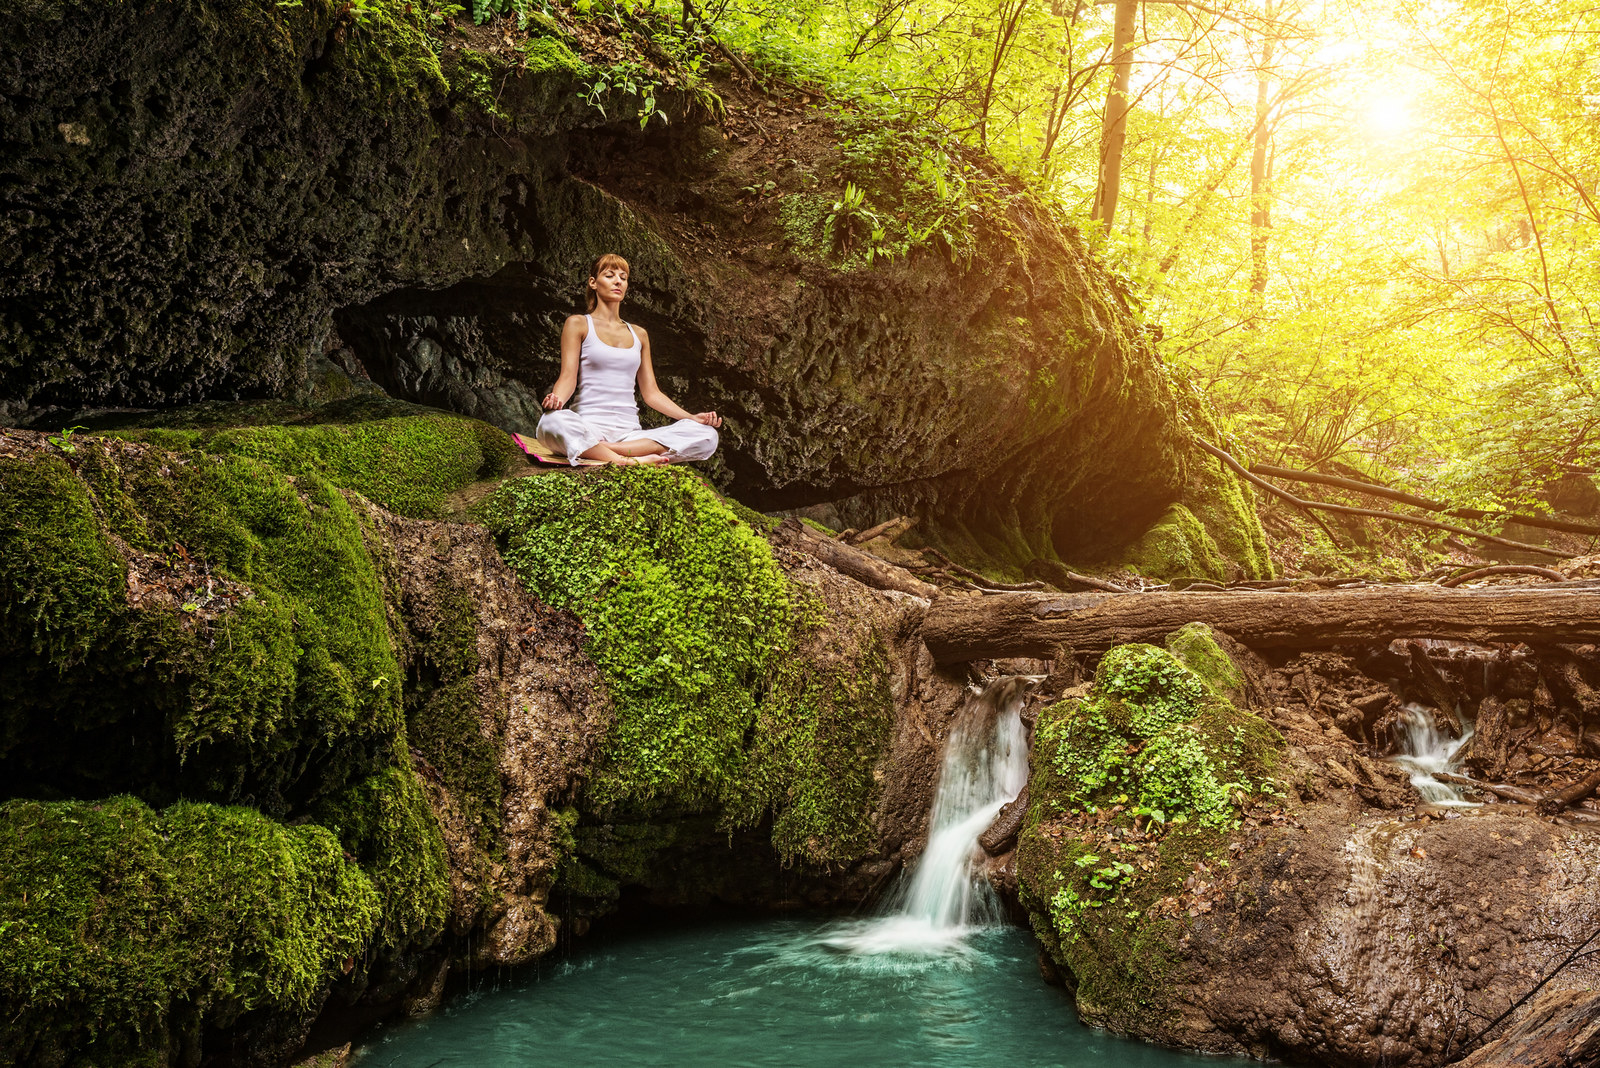 Nature take care. Релаксация природа. Природа успокоение. Созерцание природы. Медитация у водопада.